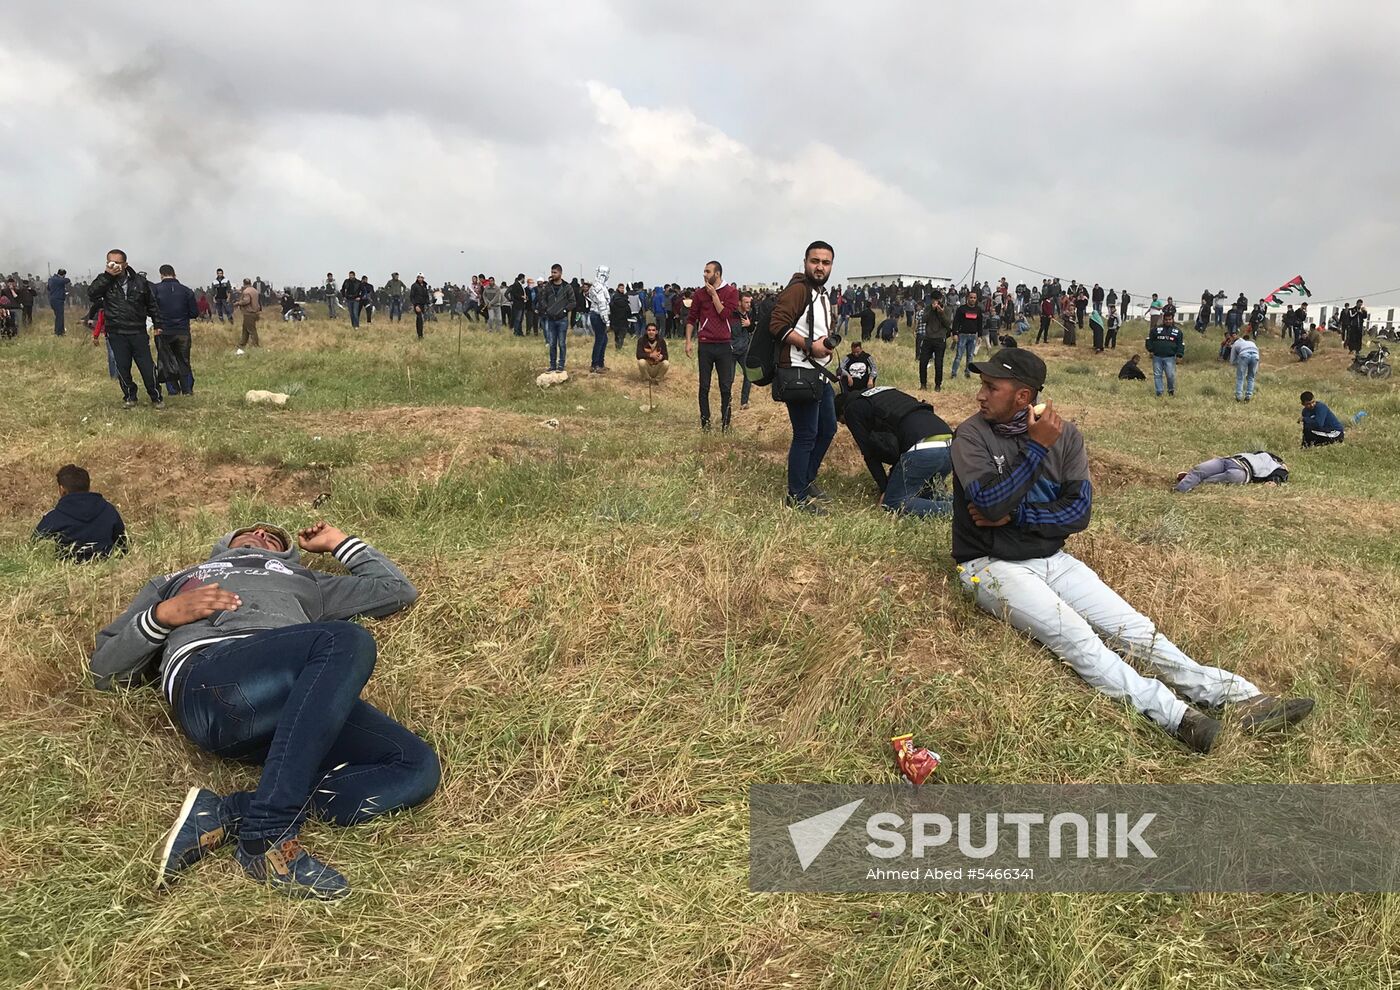 Protests at Gaza Strip's border with Israel